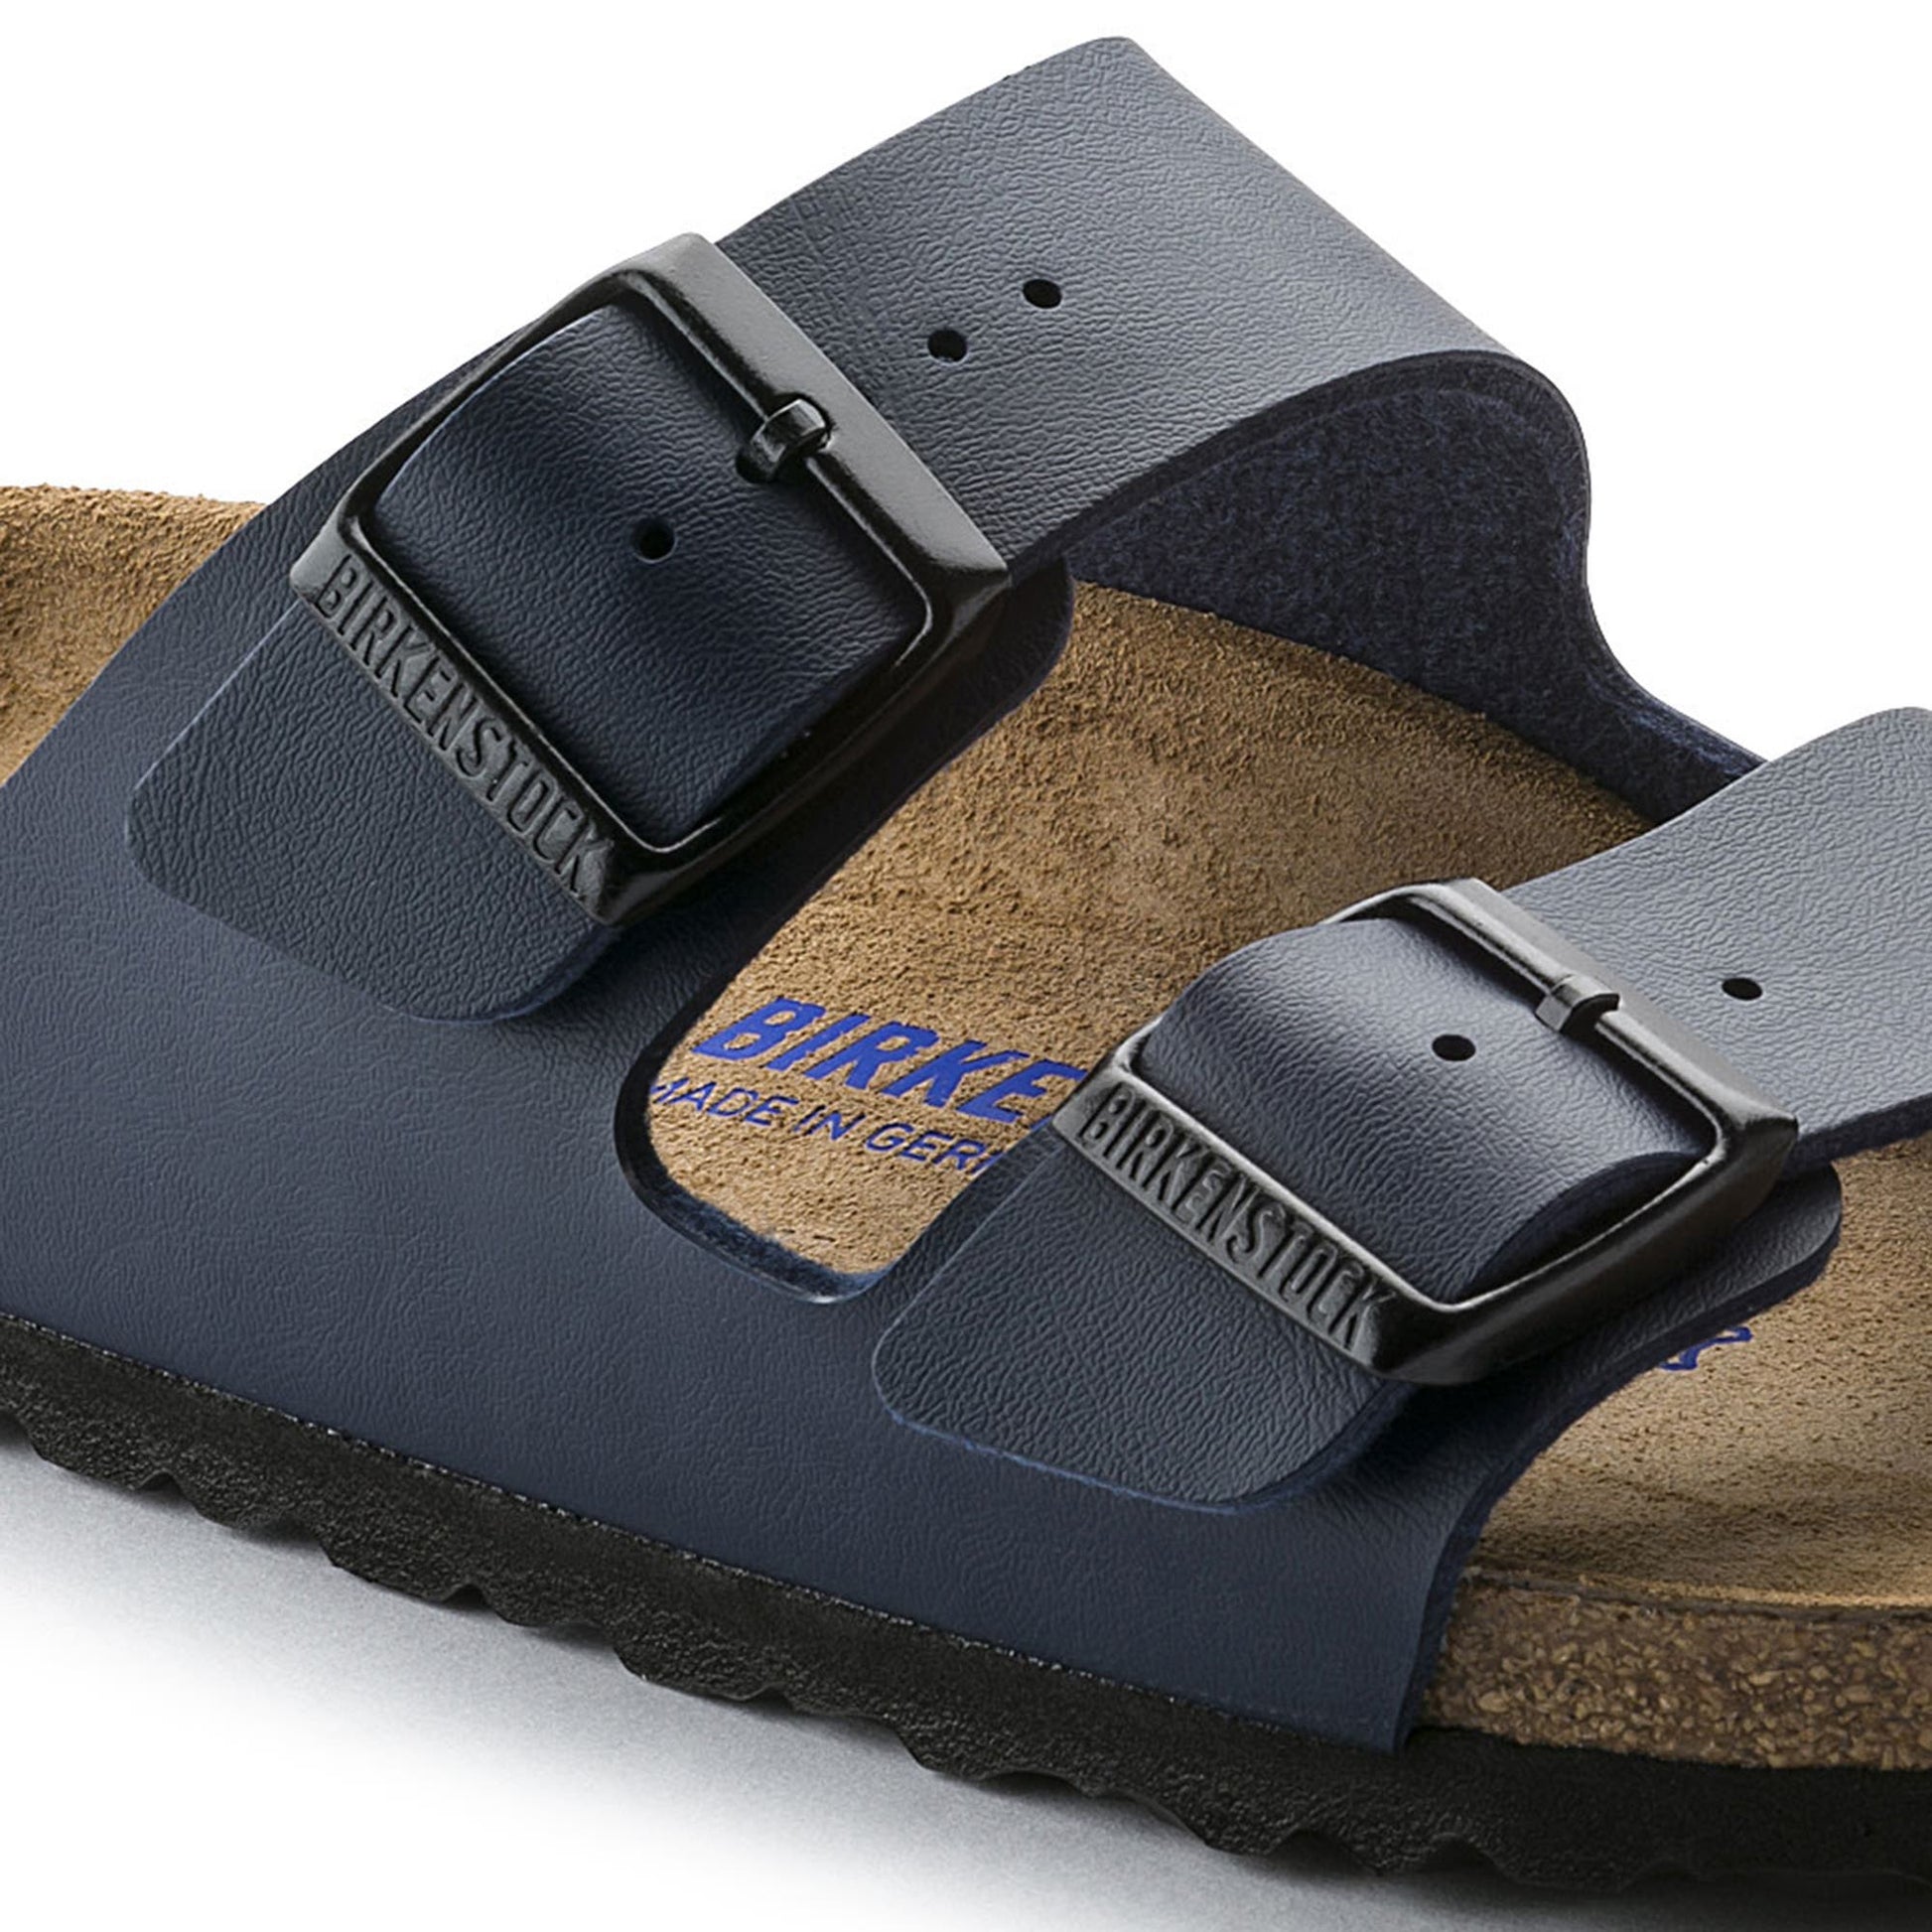 Birkenstock Arizona Birko-Flor Soft Footbed Narrow Fit Sandal (Blue, Size 41 EU)